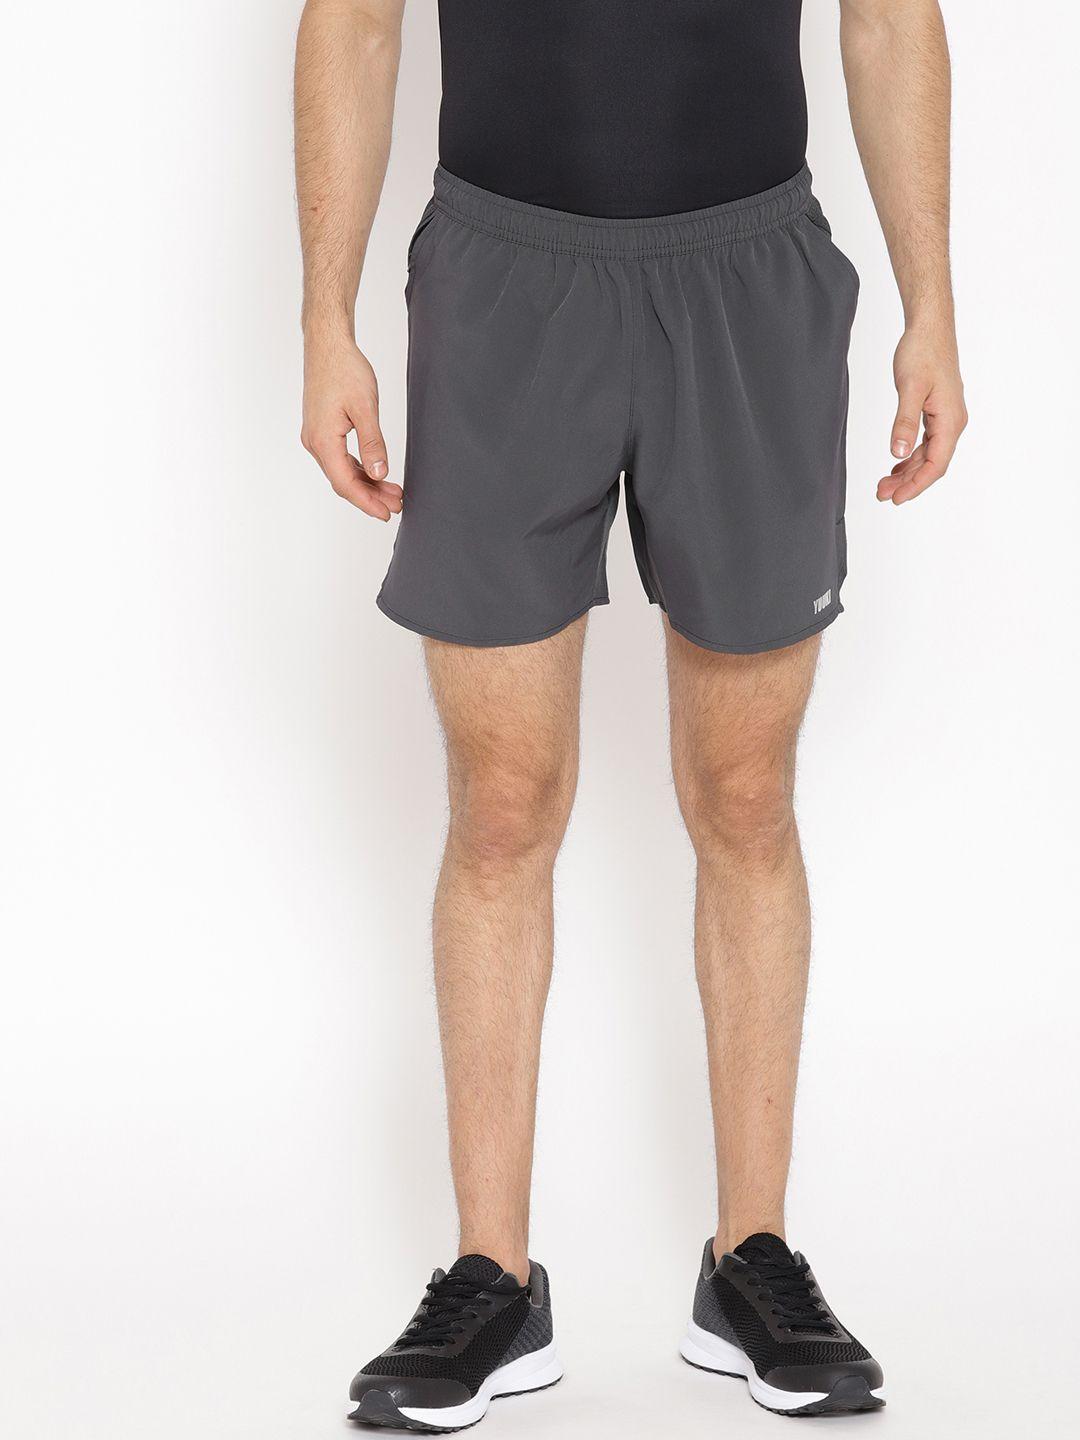 yuuki men charcoal grey solid regular fit running shorts